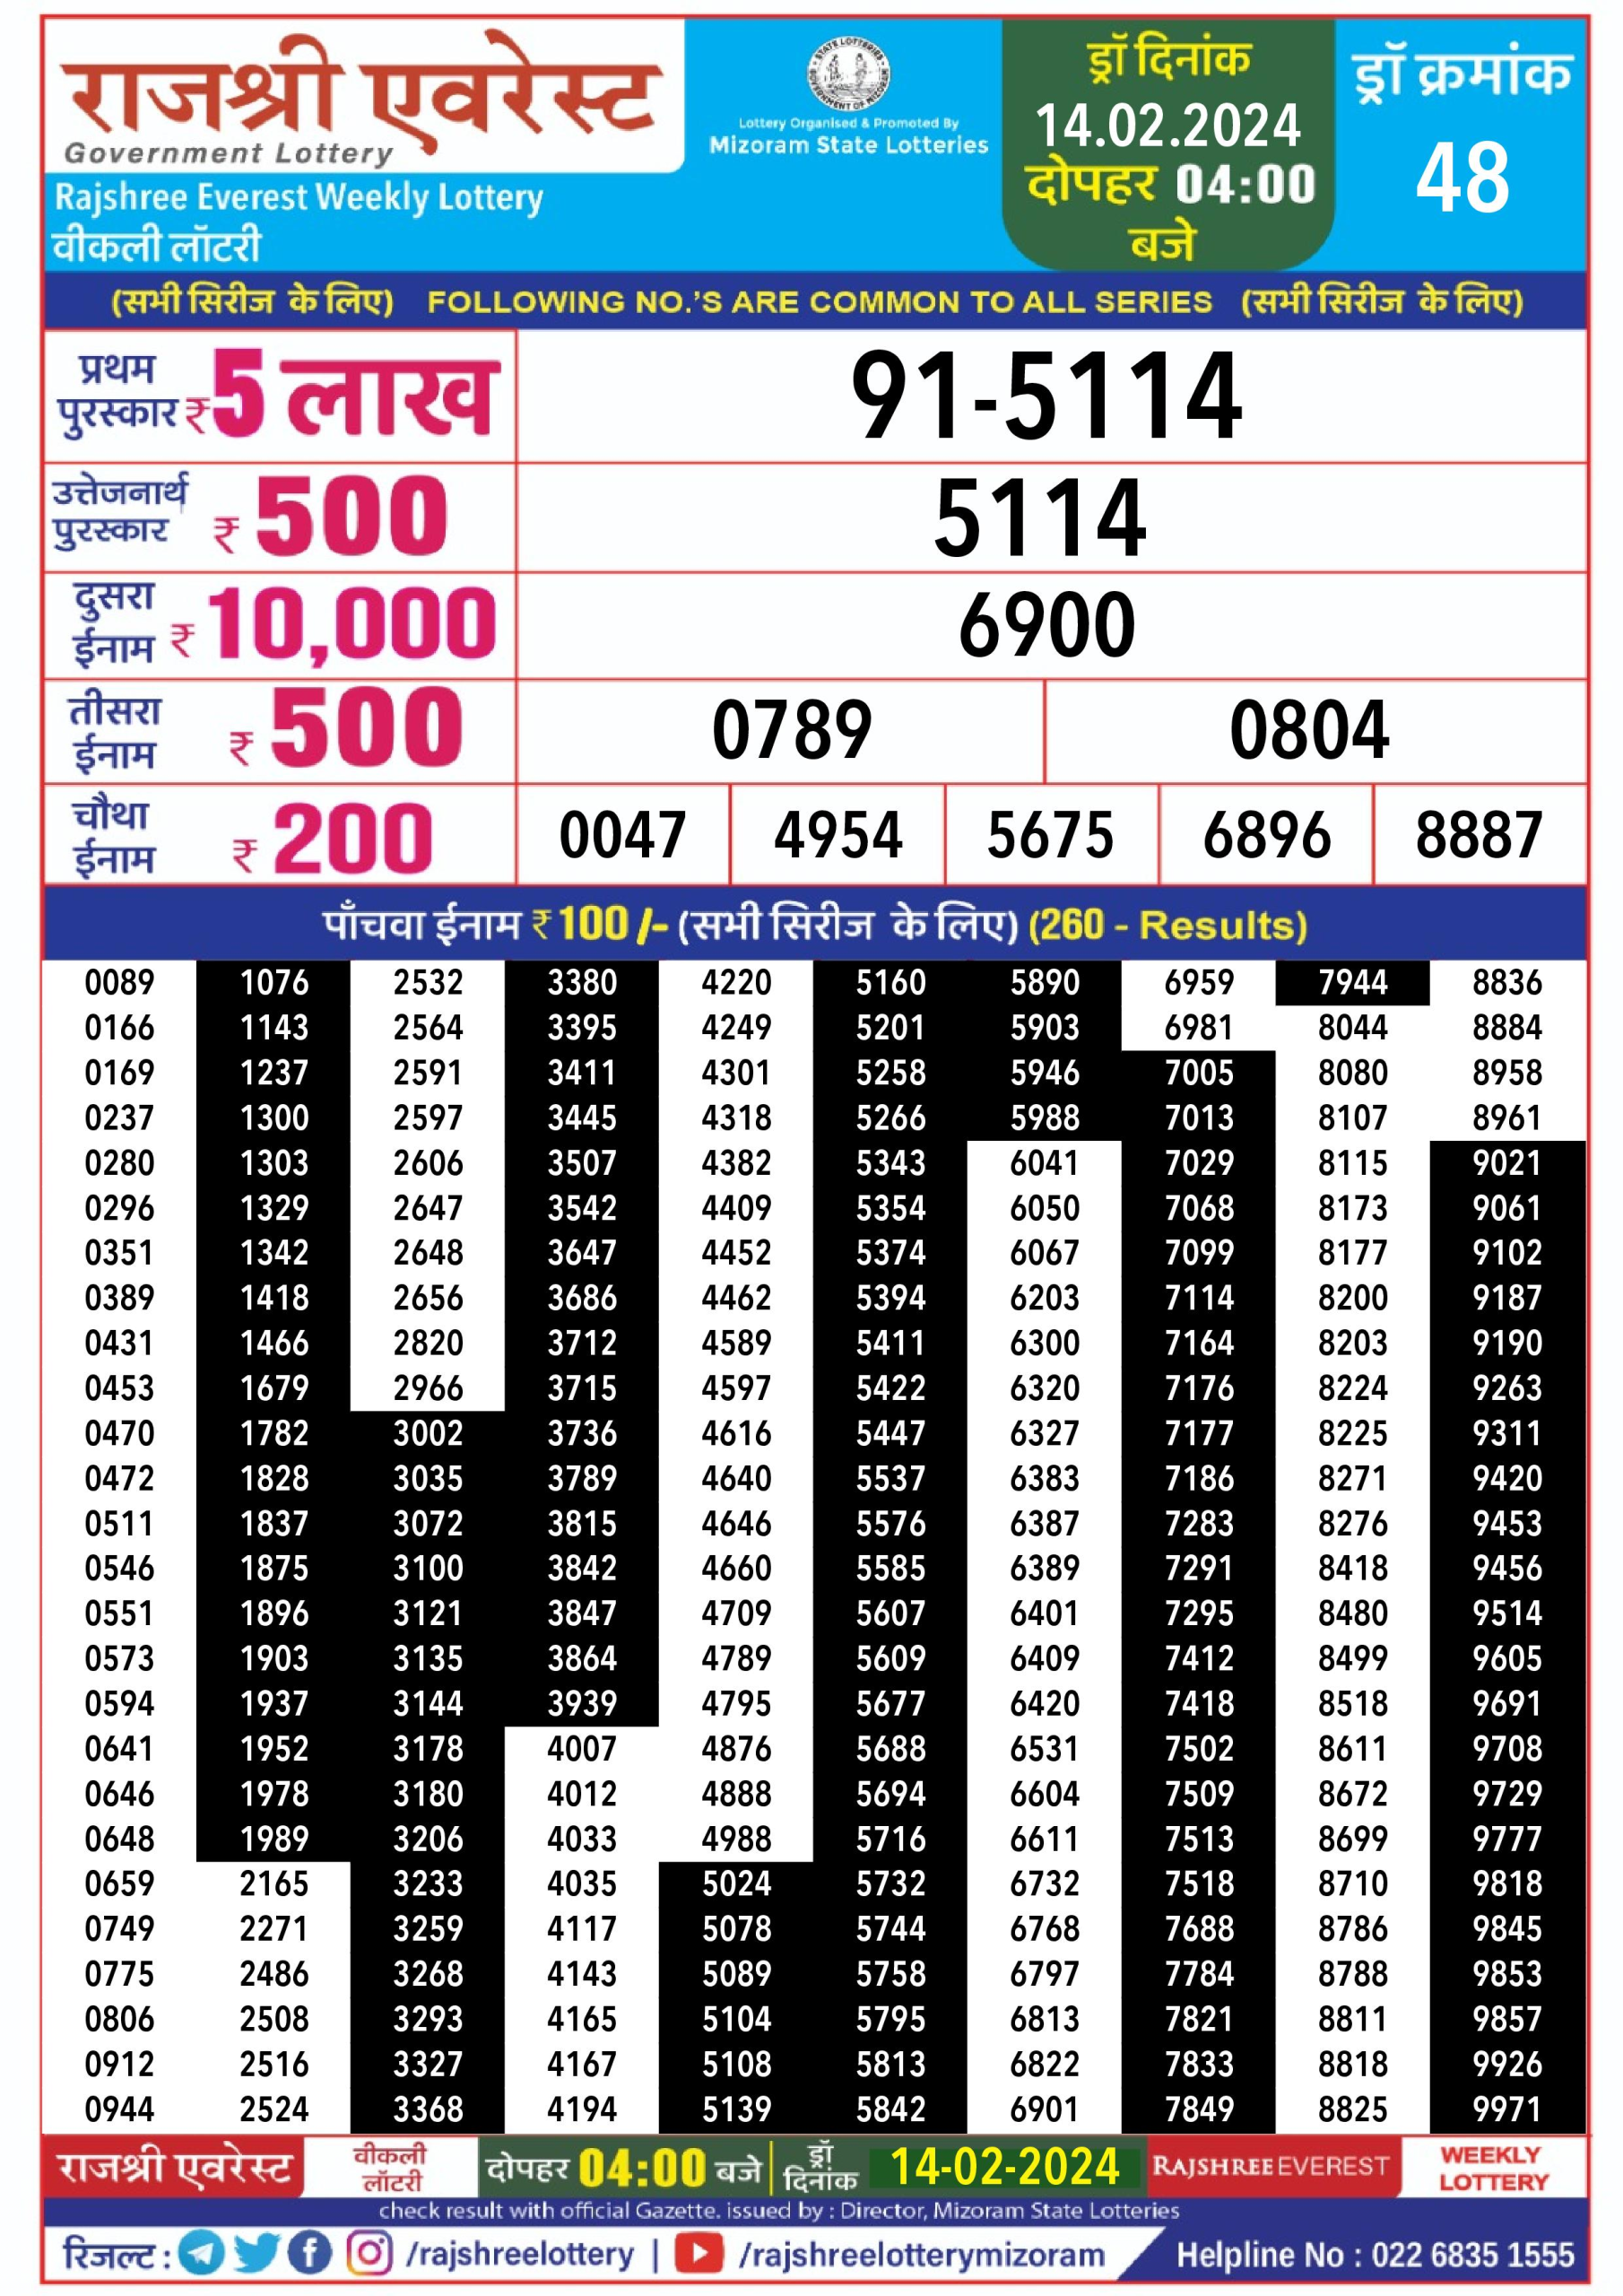 Rajshree Everest Budh Weekly Lottery Result 14 02 2024.jpeg 2 scaled